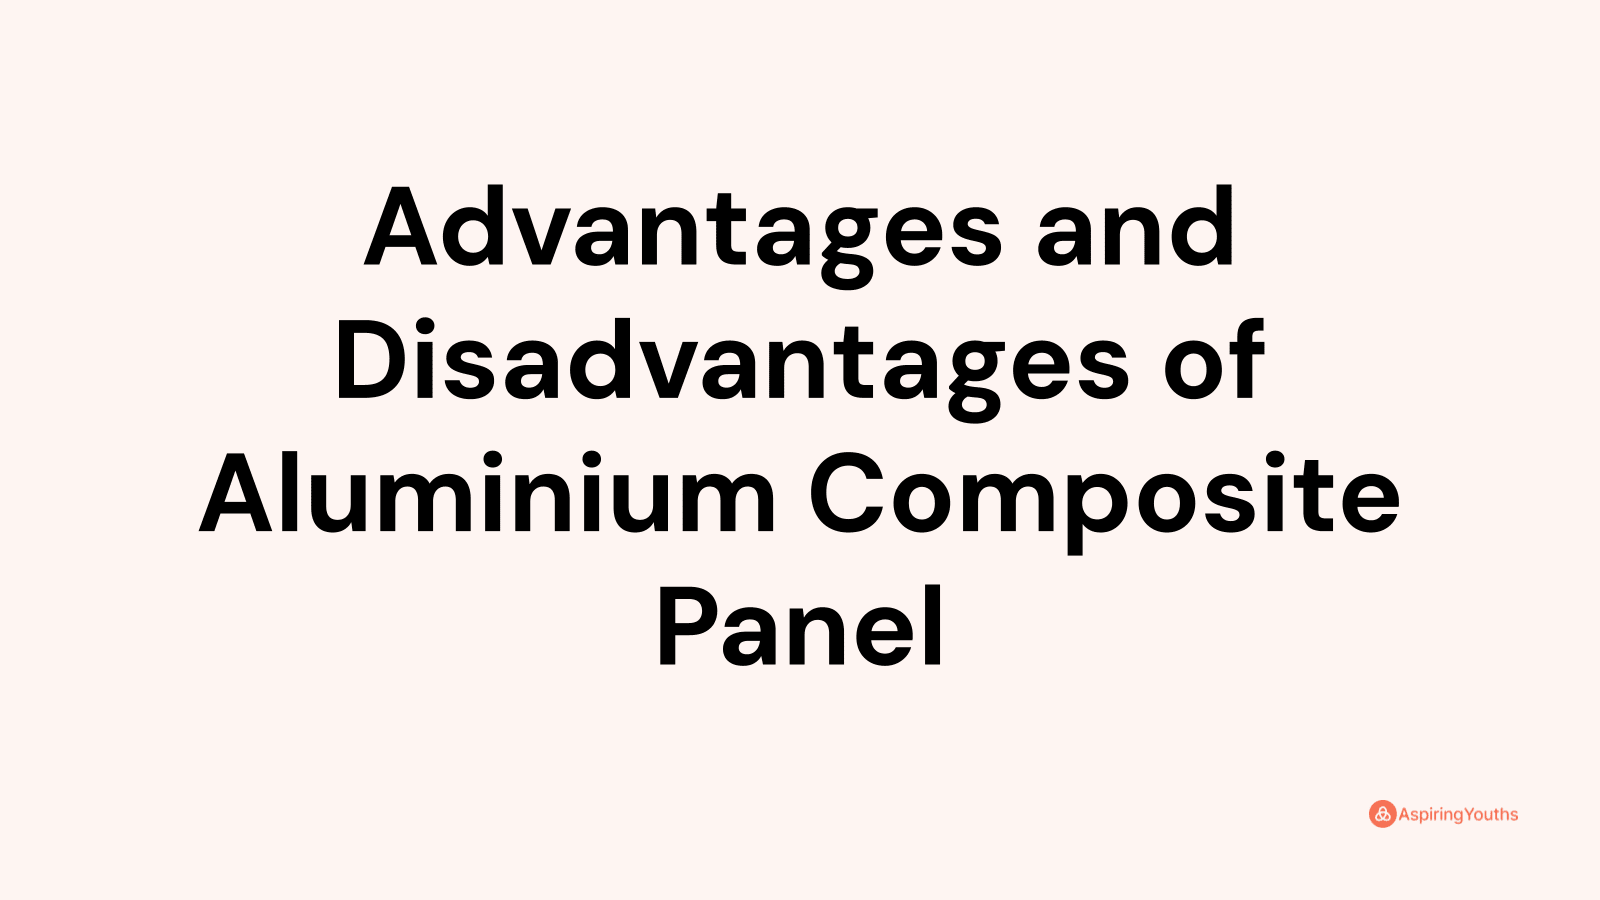 Advantages and disadvantages of Aluminium Composite Panel